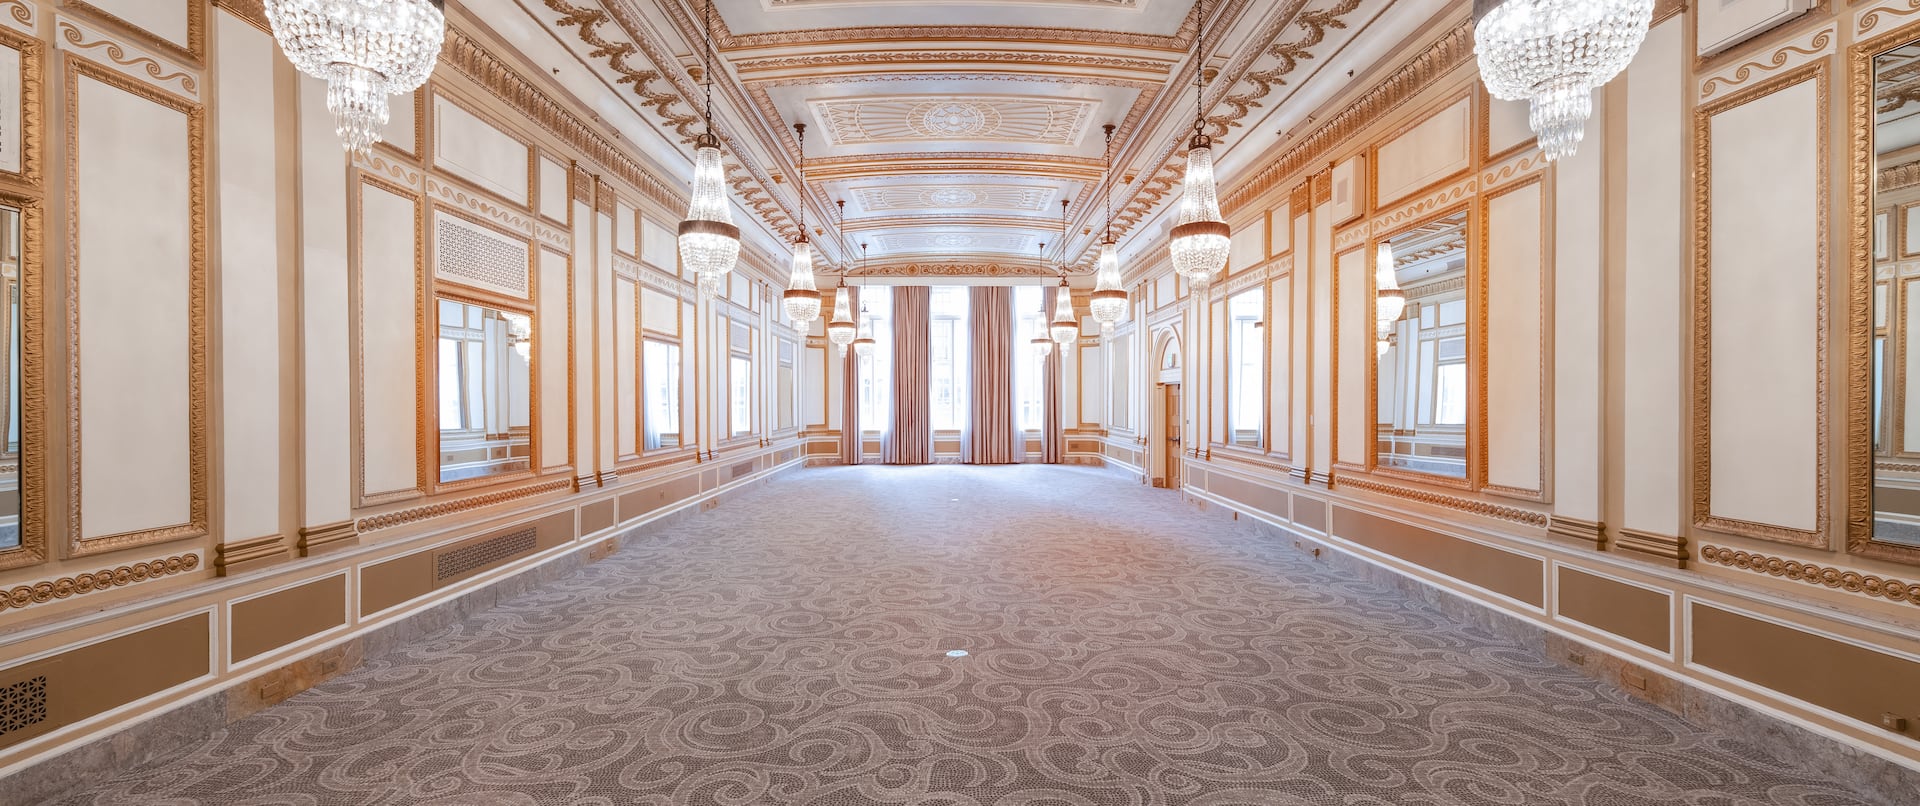 large empty ballroom